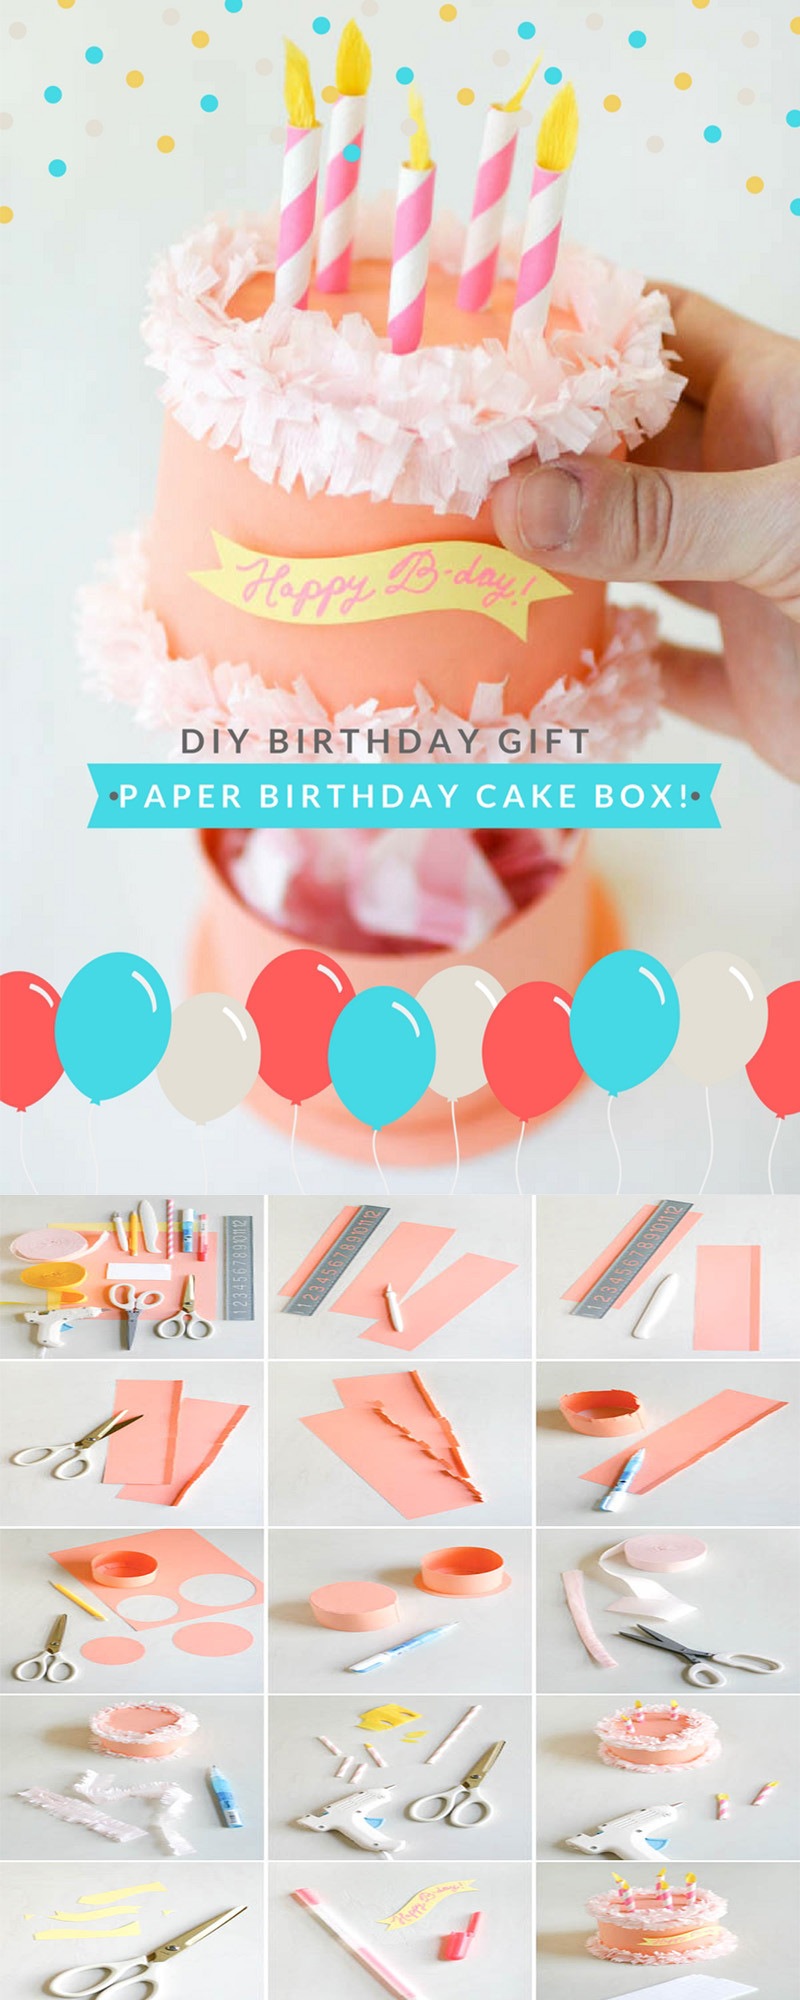 Birthday Gifts Diy
 DIY Gift Ideas for Your Boyfriend Paper Birthday Cake Box